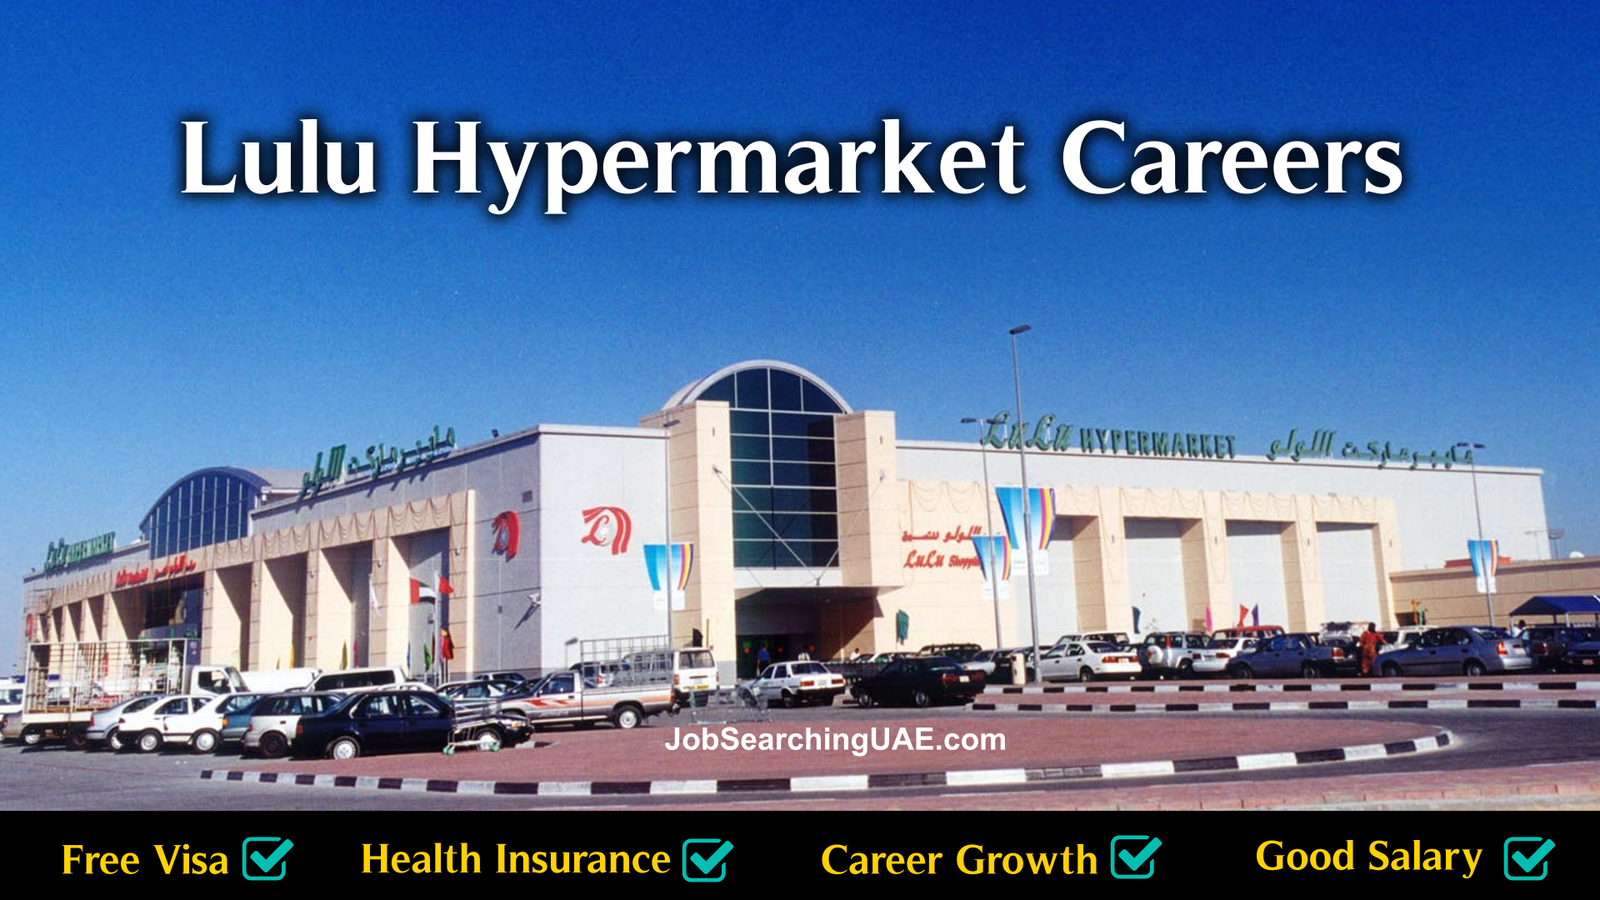 Lulu Hypermarket Careers: Apply For Lulu Careers in Dubai-UAE